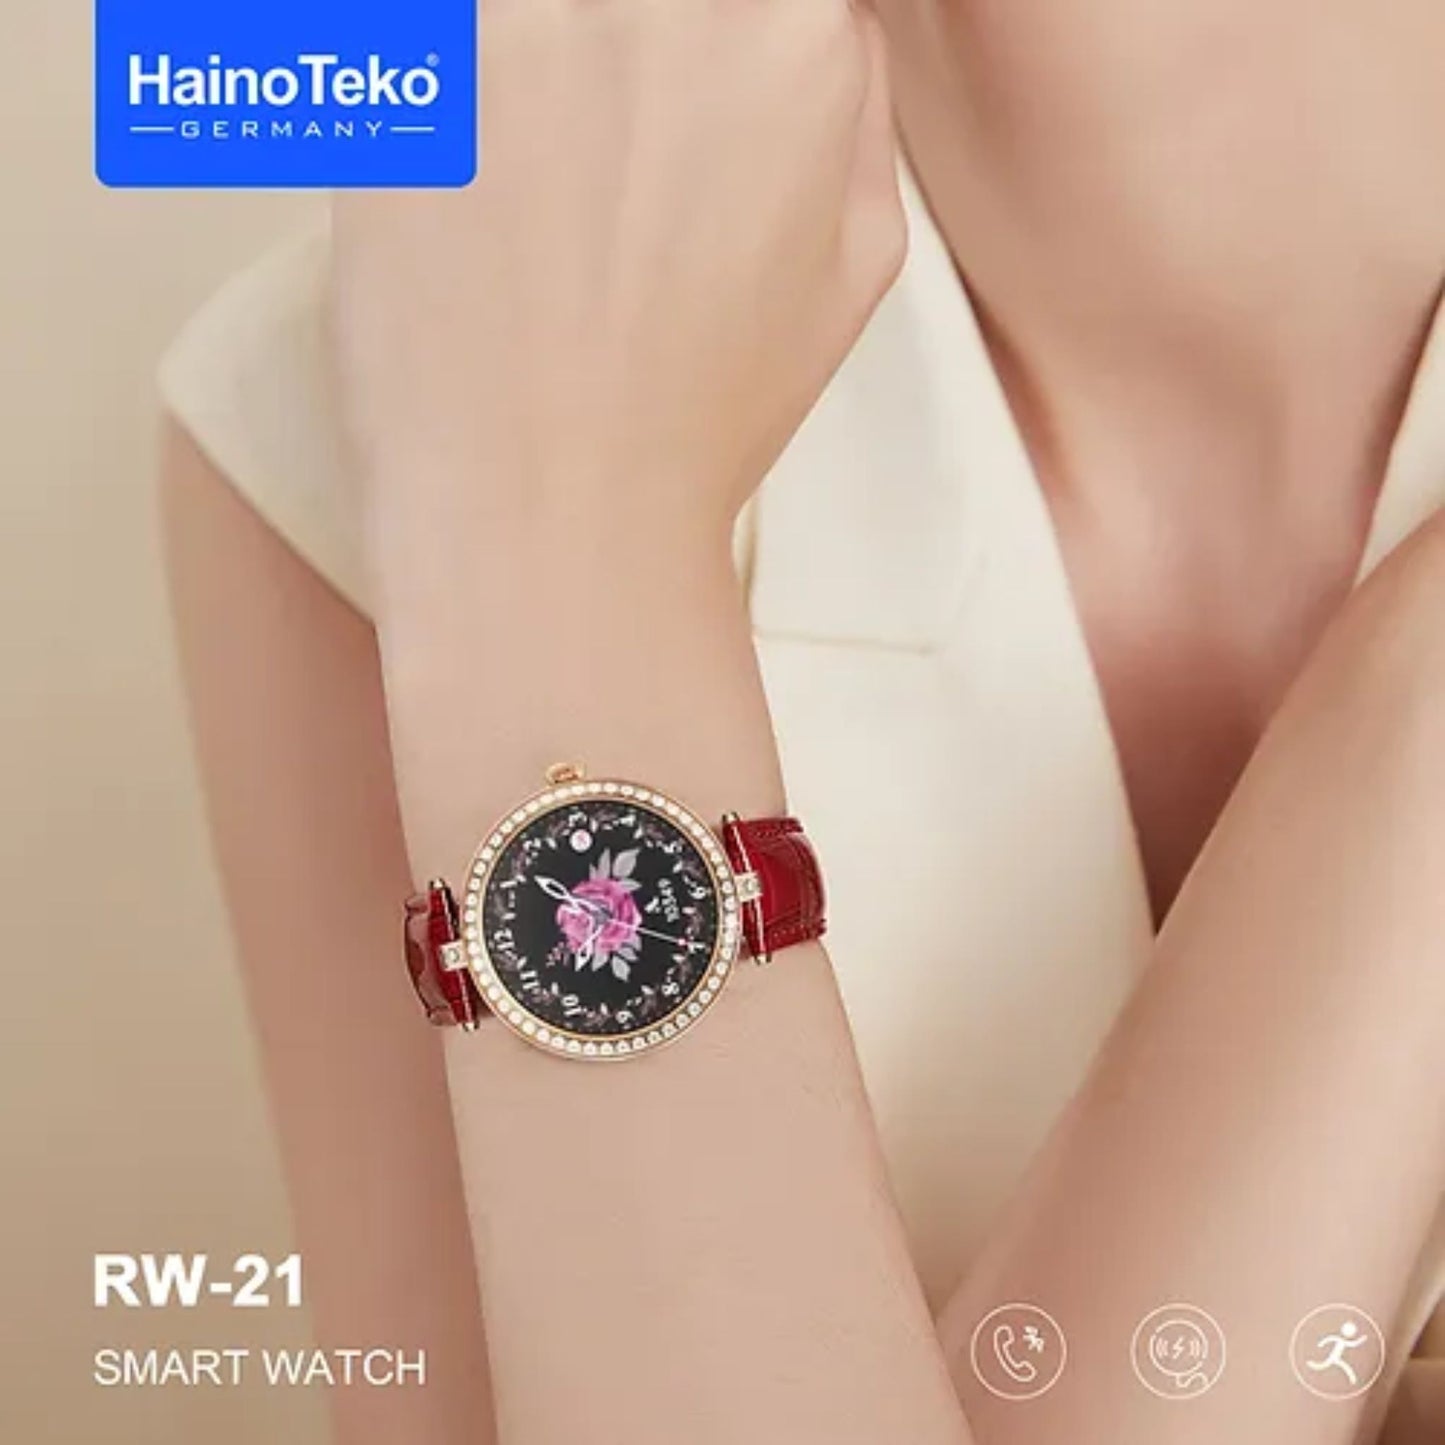 Haino Teko Germany Sports Smart Watch RW-21 with Bluetooth Call